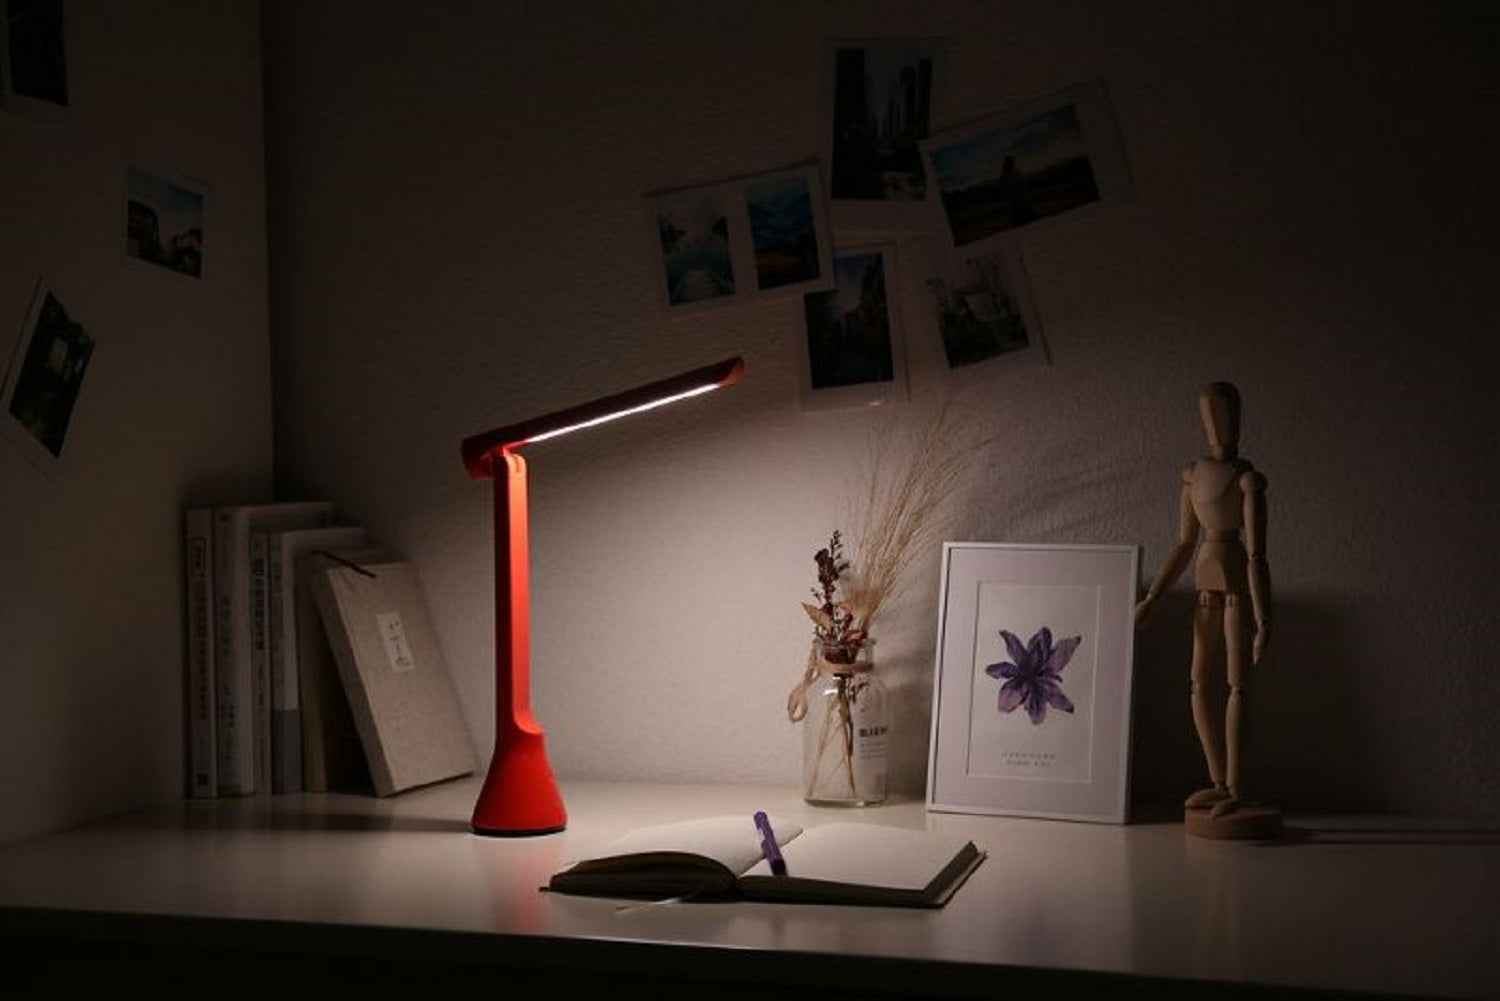 Yeelight: Folding Desk Lamp Rechargeable Pro - Red